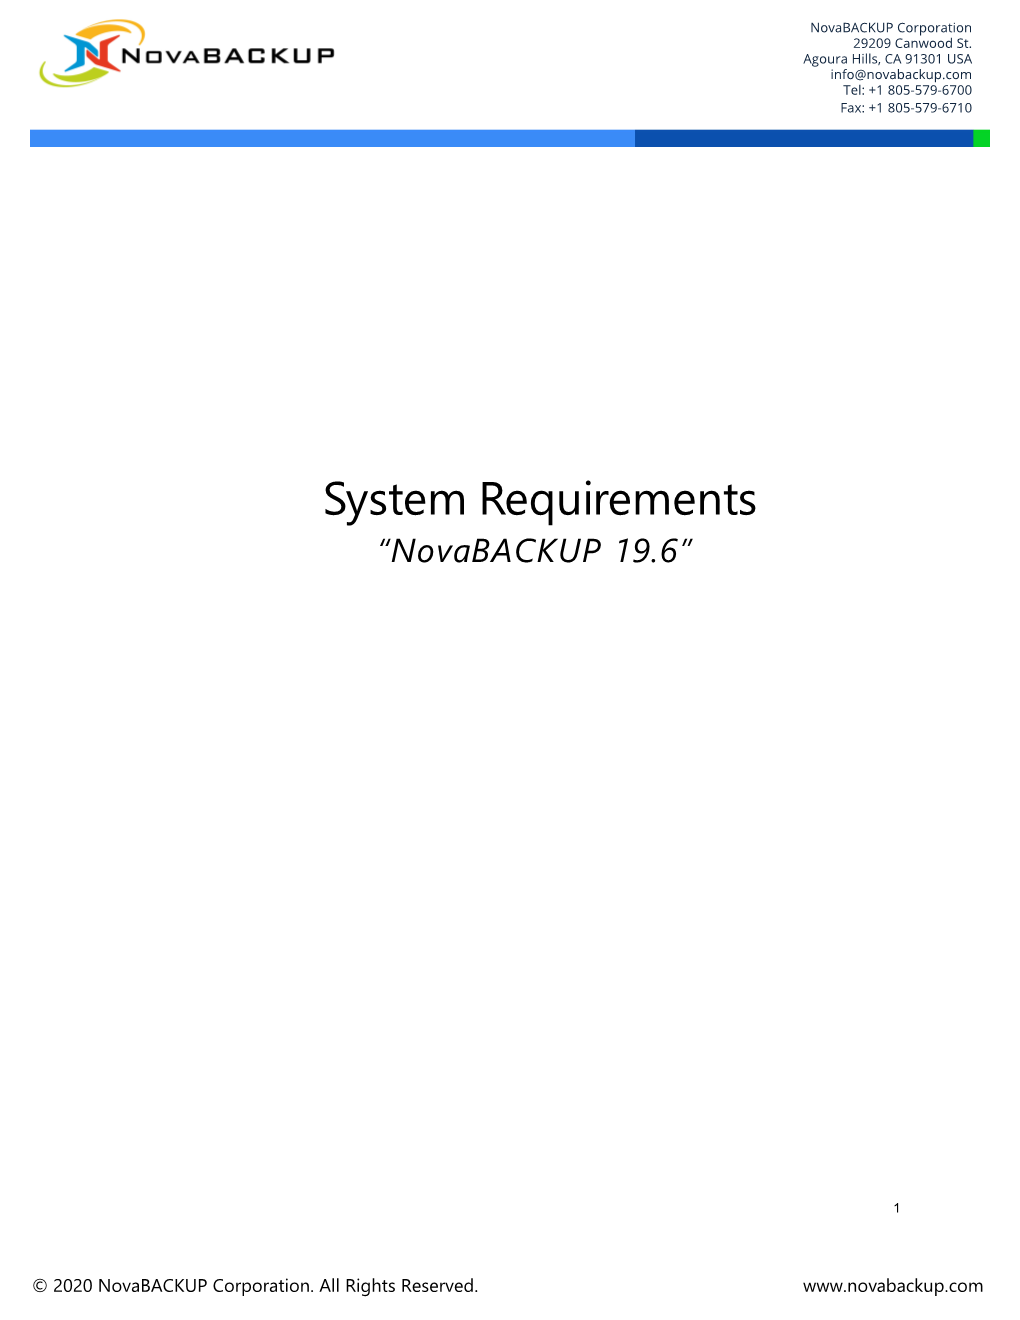 System Requirements “Novabackup 19.6”